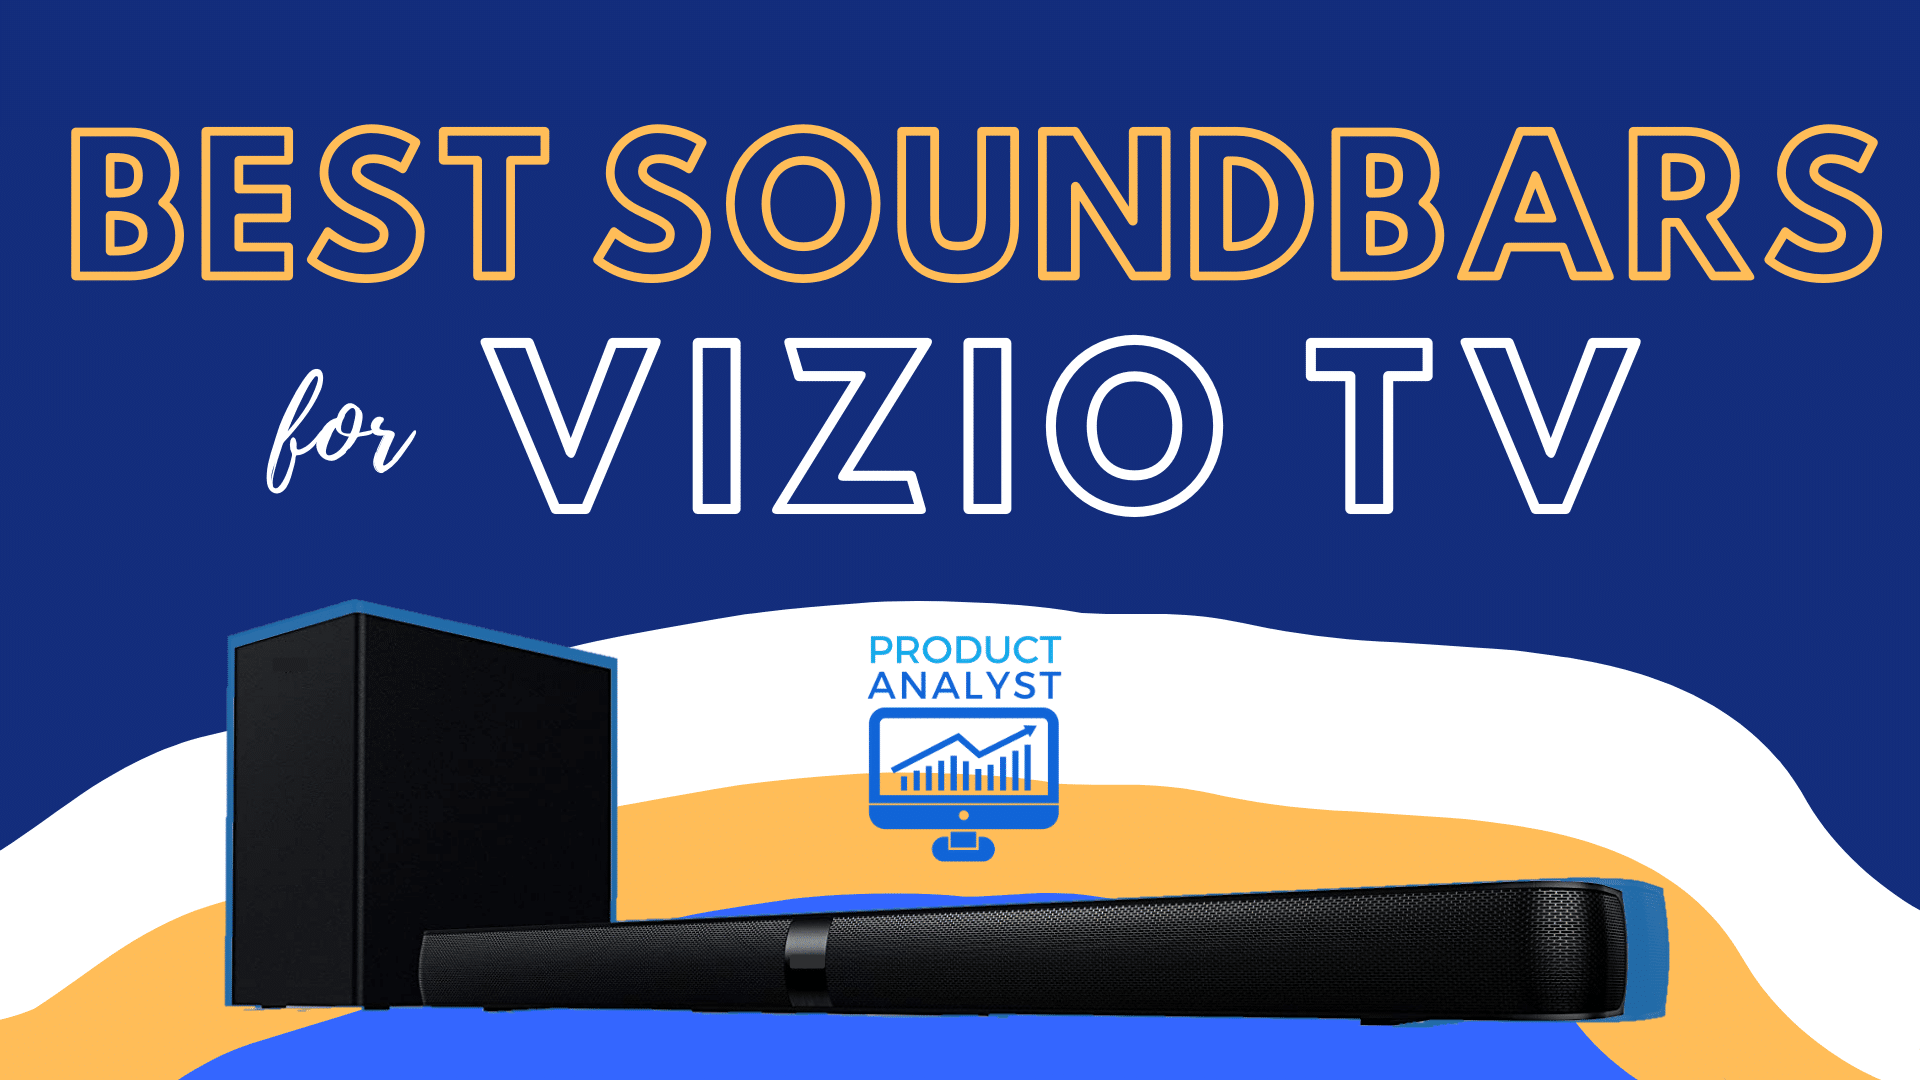 soundbars for vizio tv